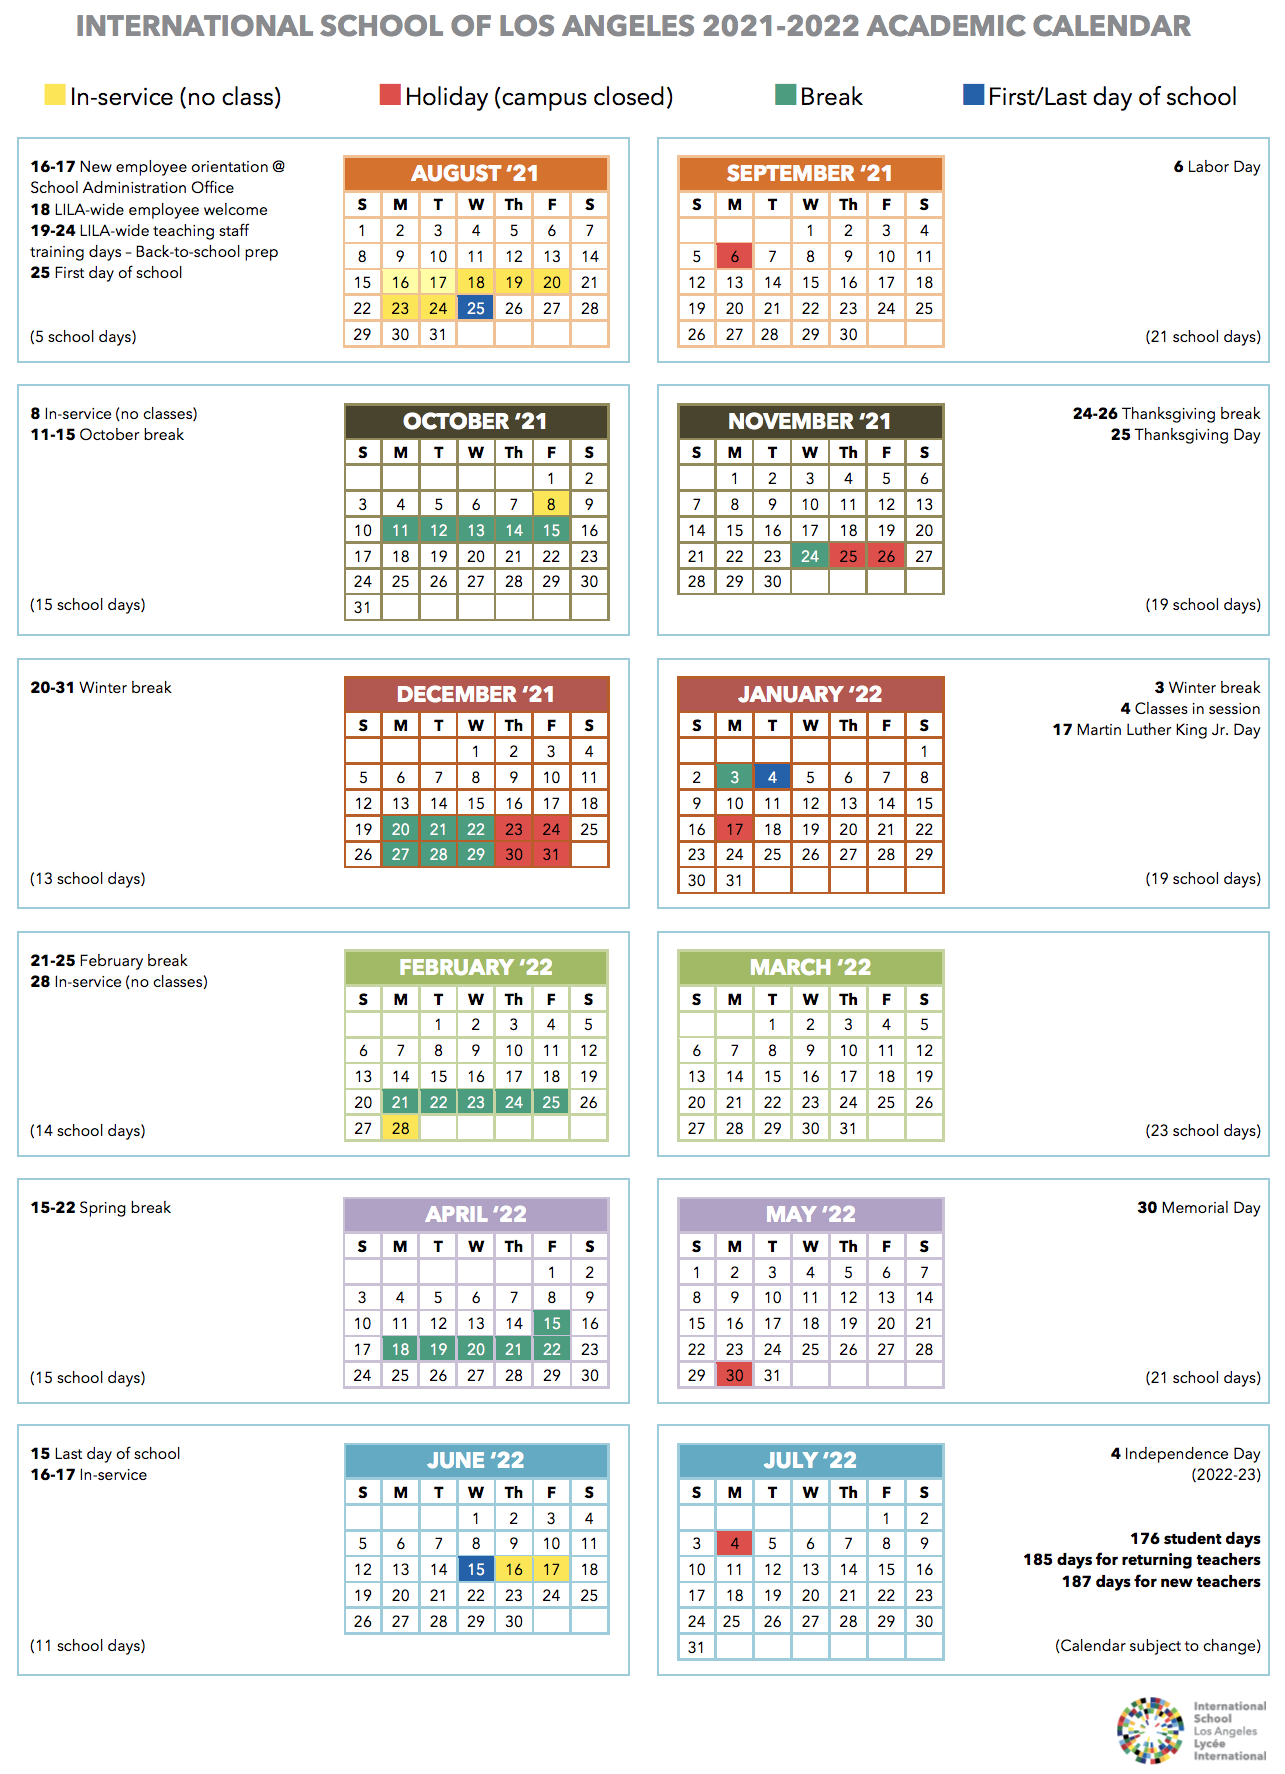 Csun Spring 2022 Calendar Calendar | International School Of Los Angeles